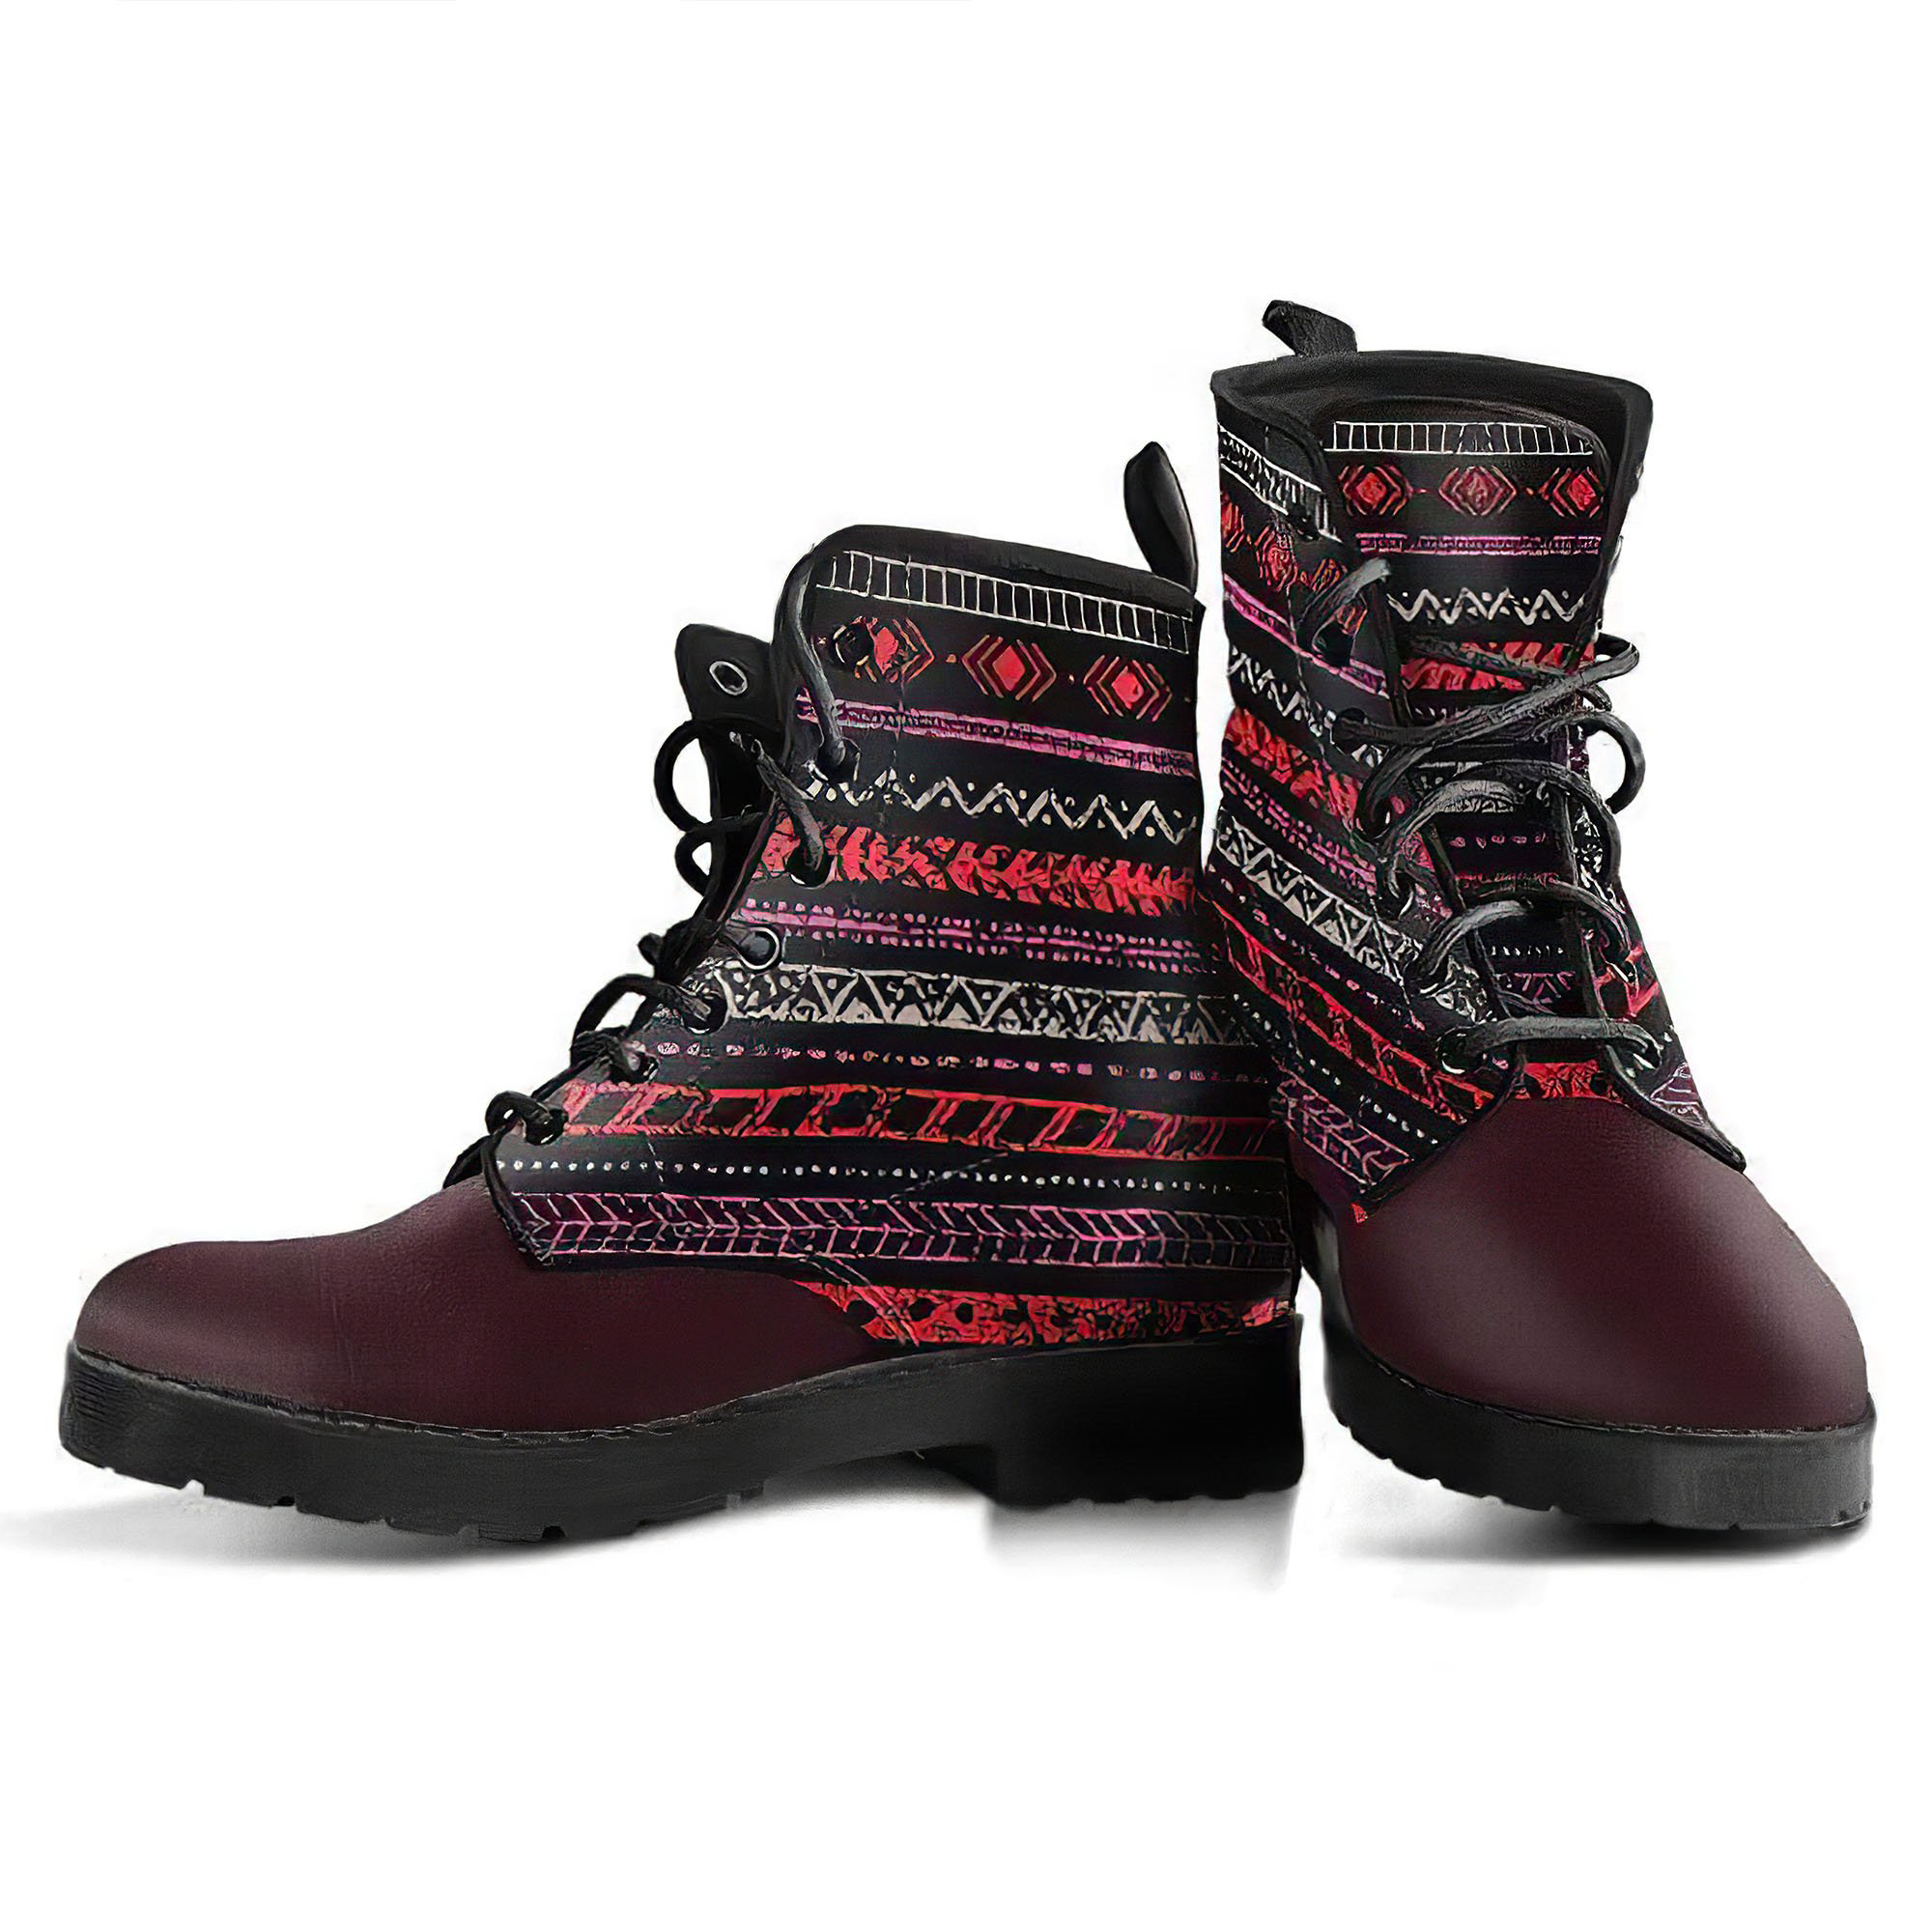 boho-pattern-handcrafted-boots-2-gp-main.jpg